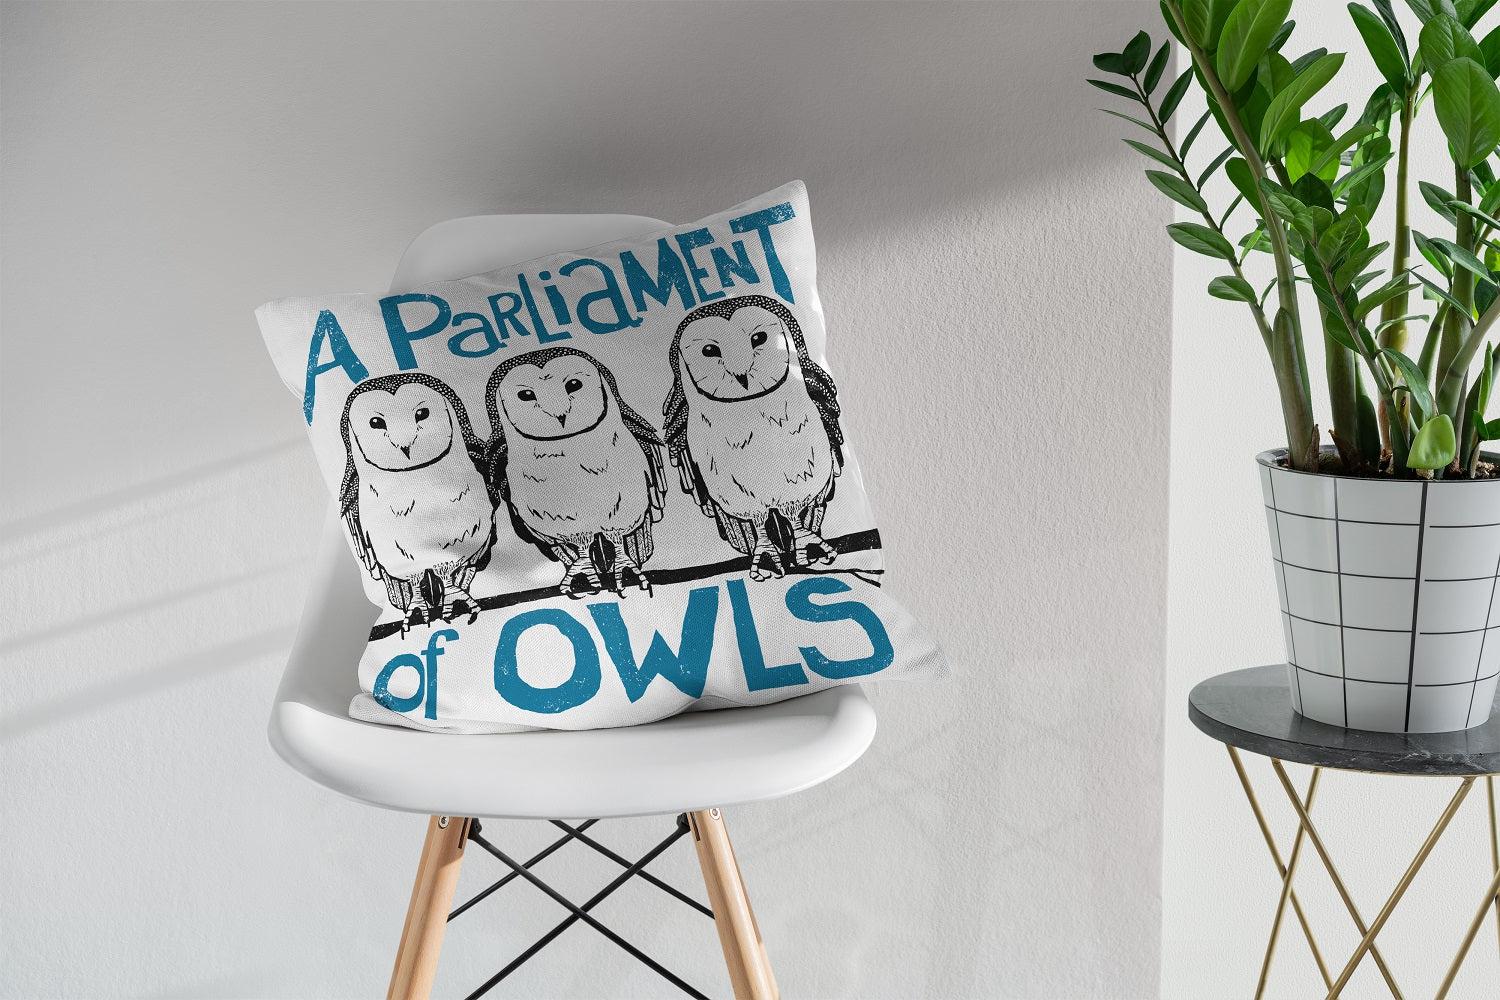 Parliament of Owls - Collective Noun Cushion